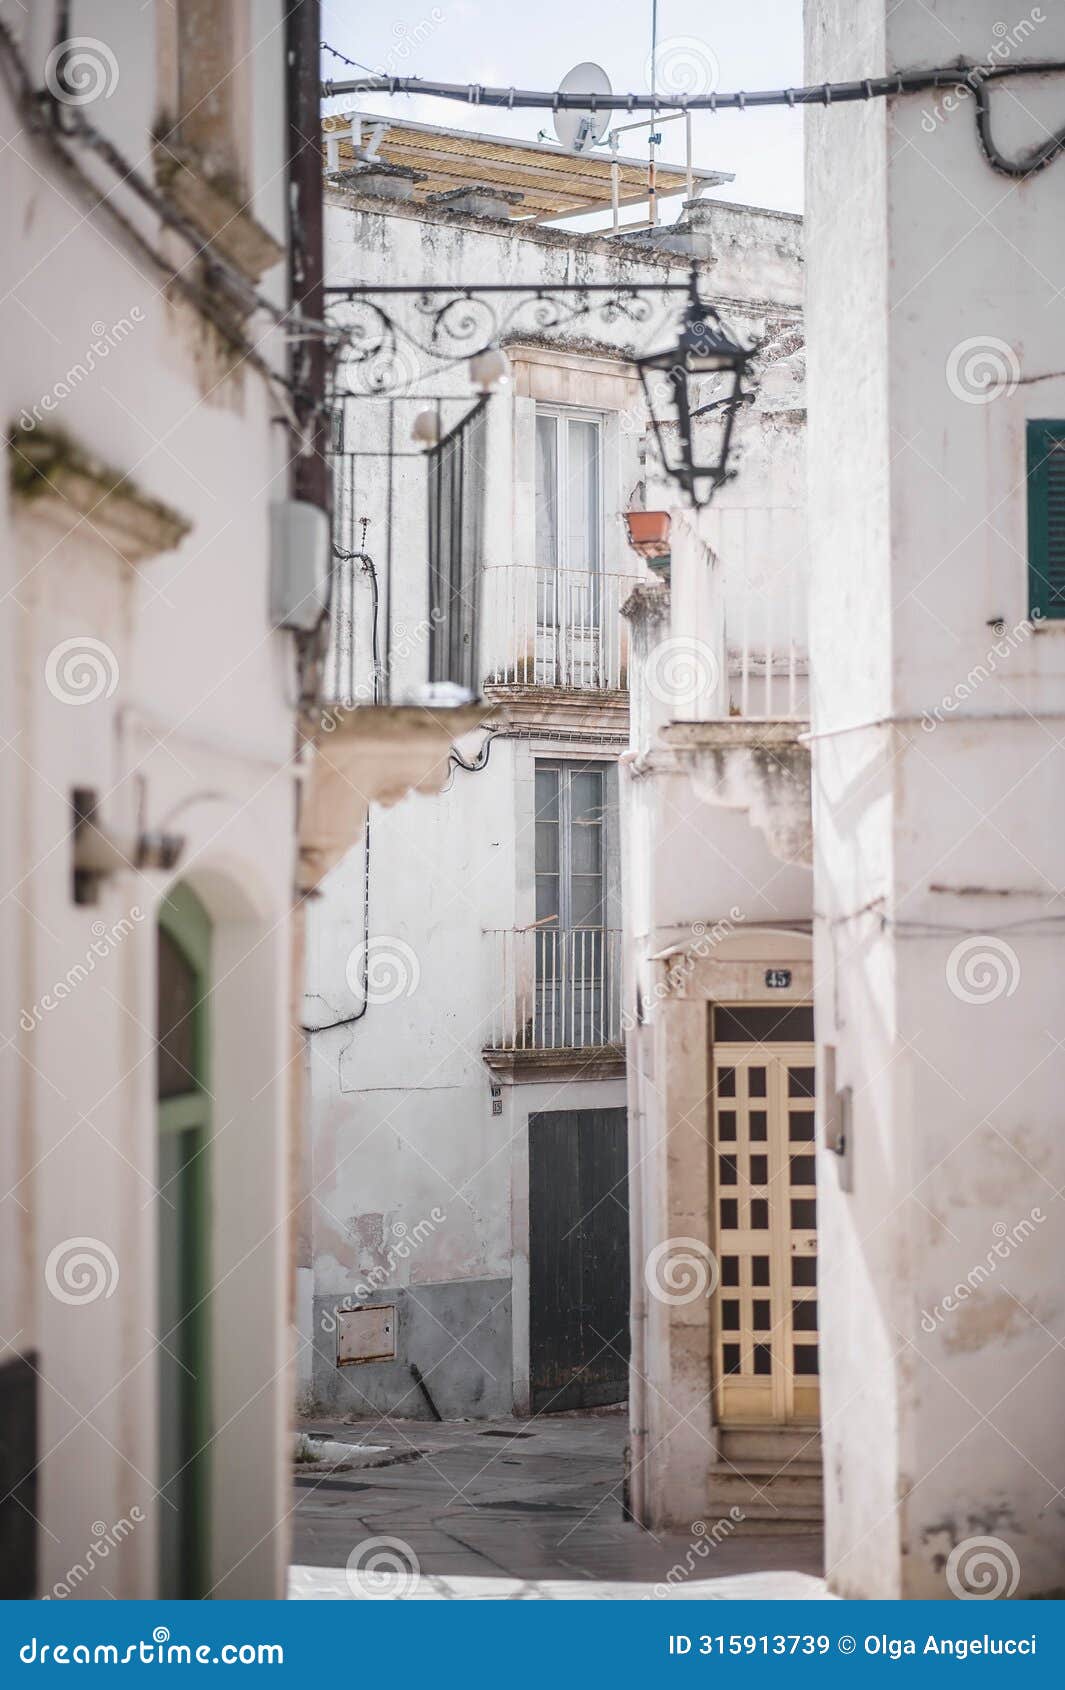 narrow streets of old town of martina franca,